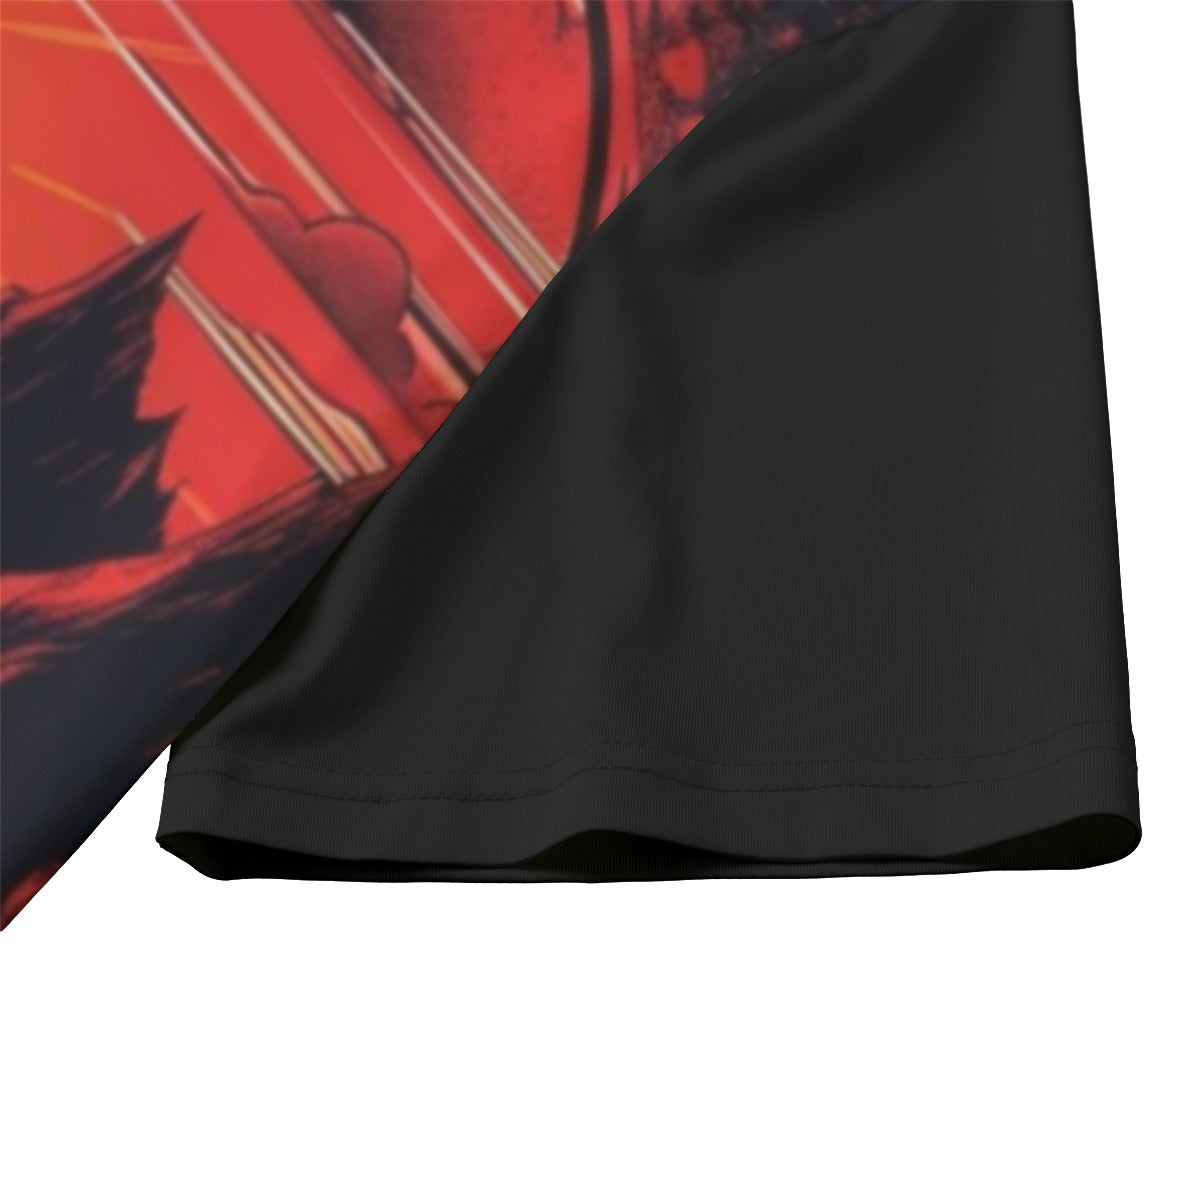 All-over Print Men's Billiard Cloth With Black Zipper